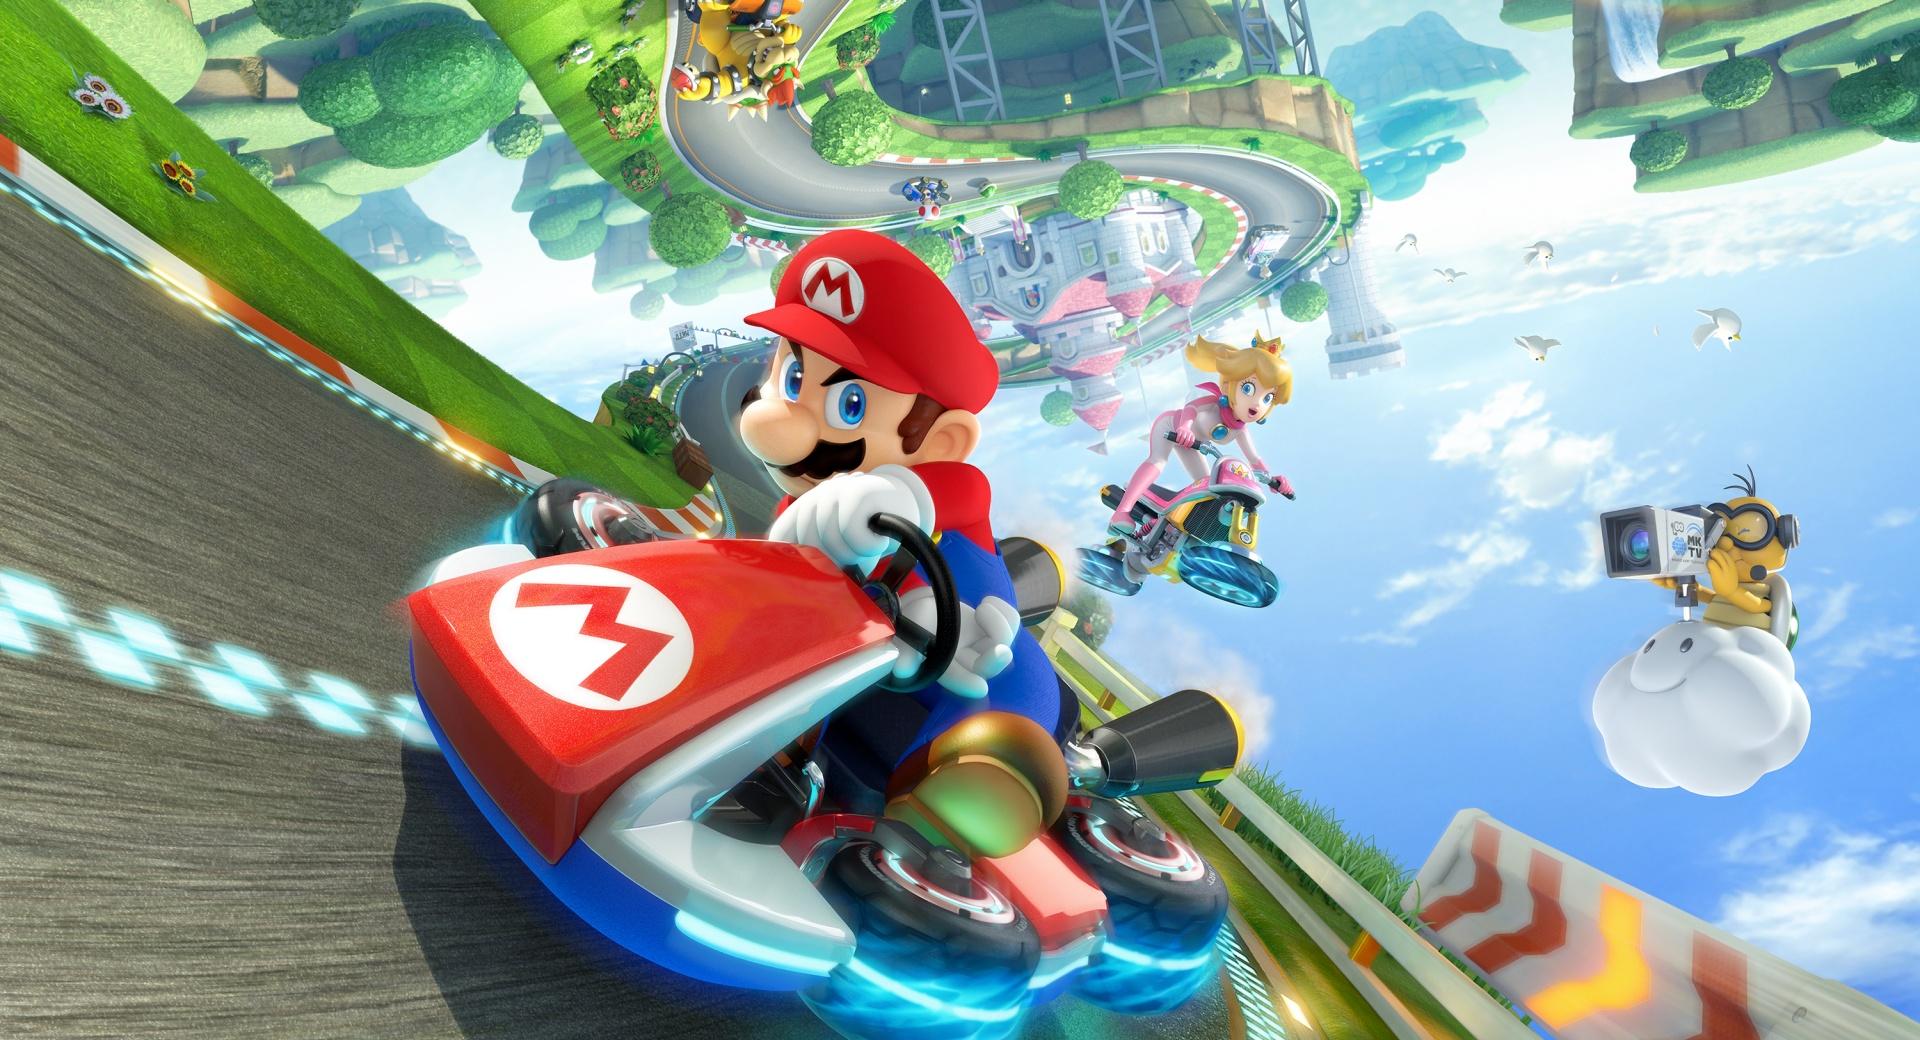 Mario Kart 8 Koopaling Characters at 1600 x 1200 size wallpapers HD quality